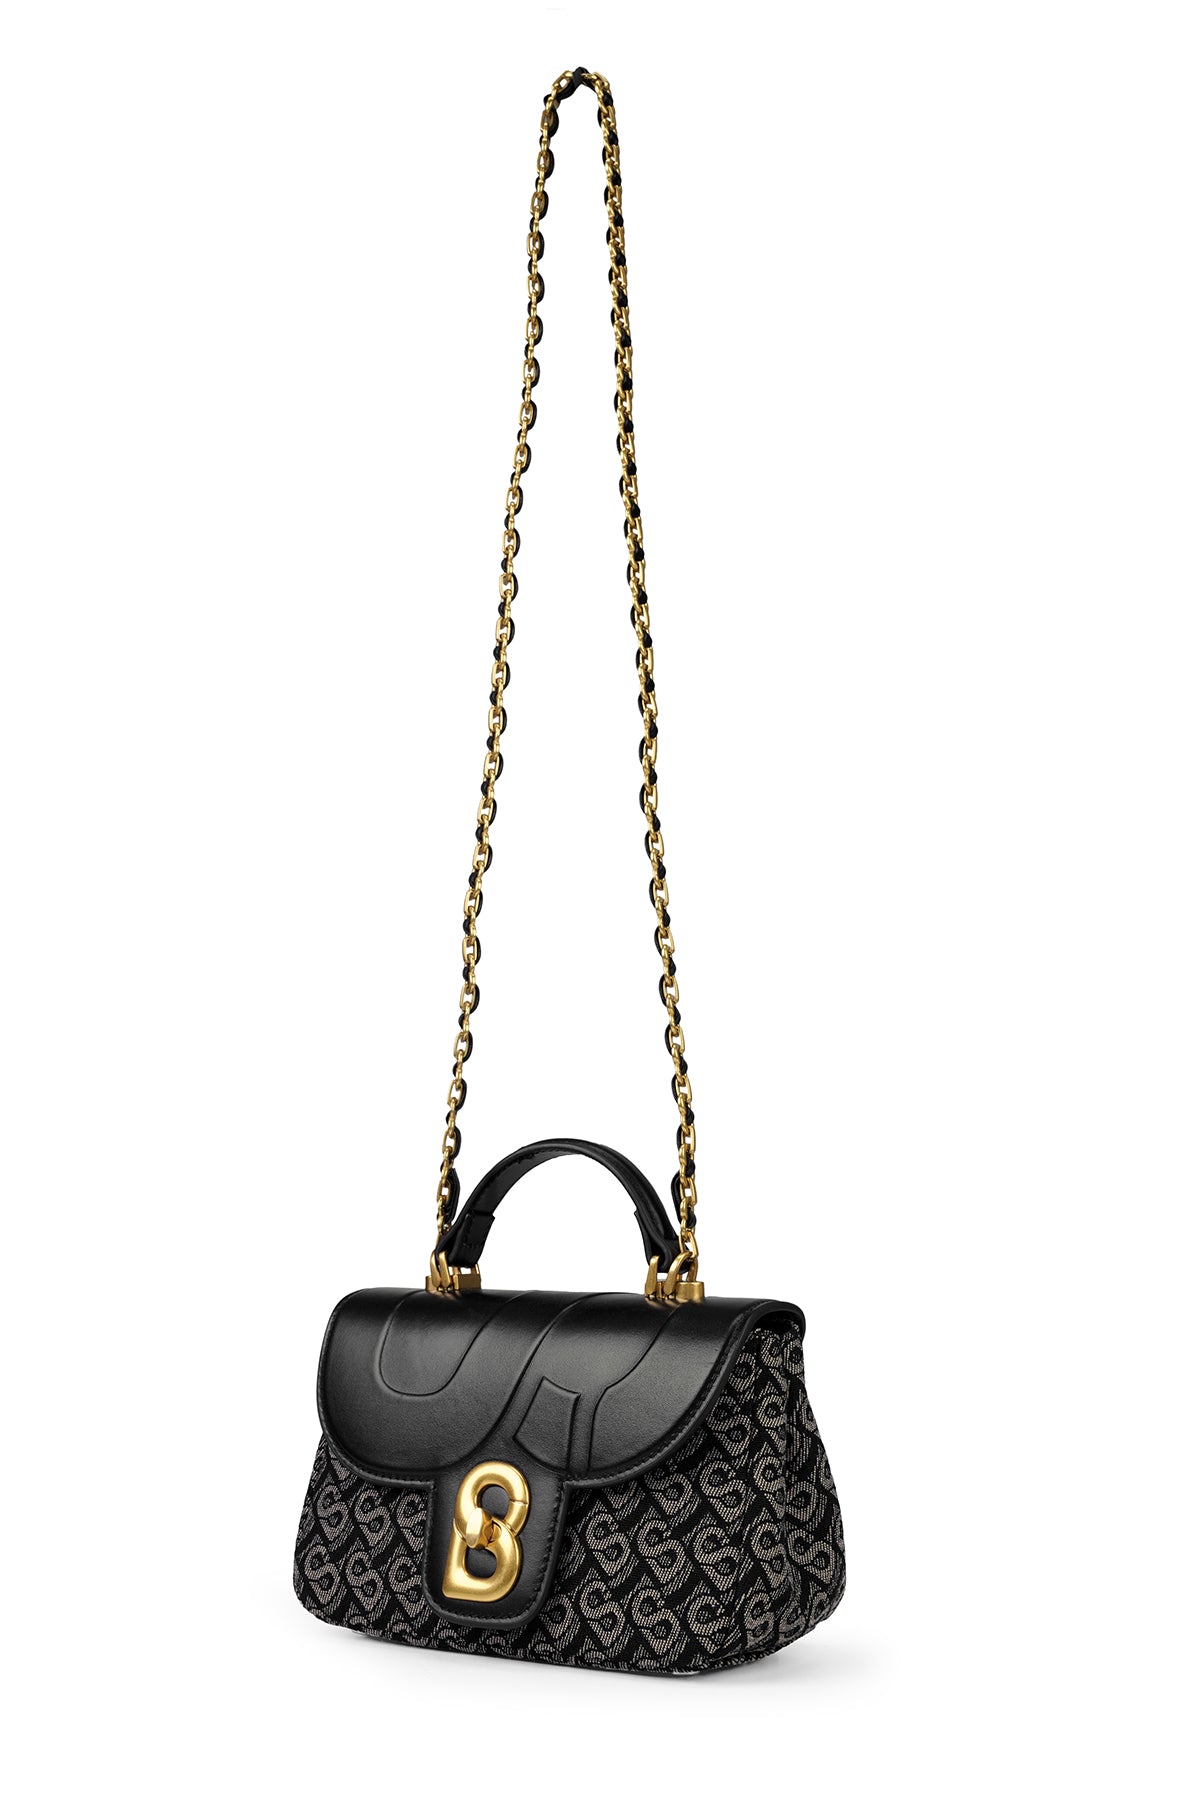 Alma Bimu Jacquard Bag Small - Black